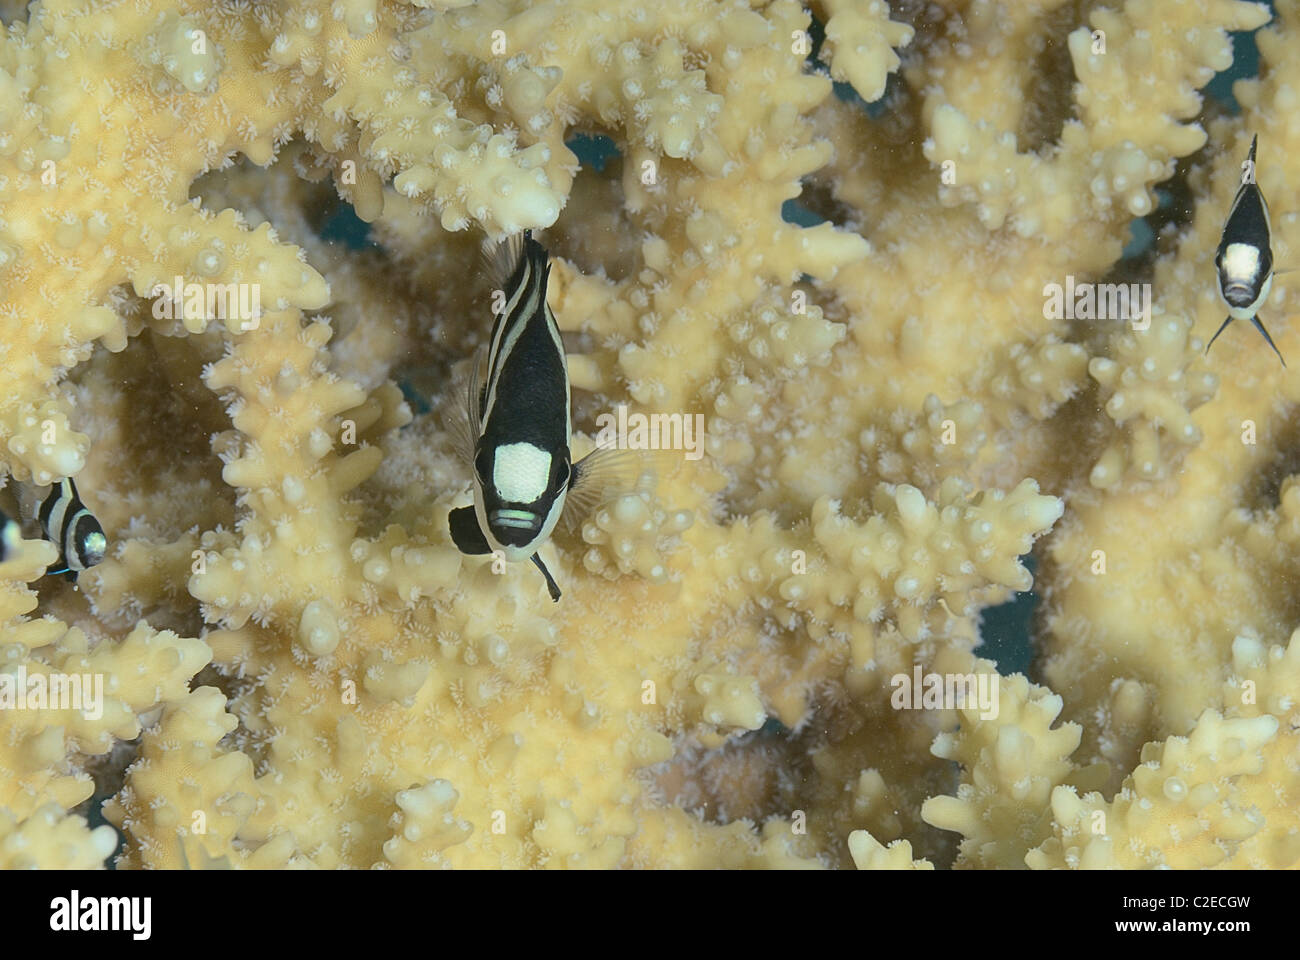 Humbug dascyllus, damselfish, fish, Saint John Reefs, Red Sea, Egypt Stock Photo